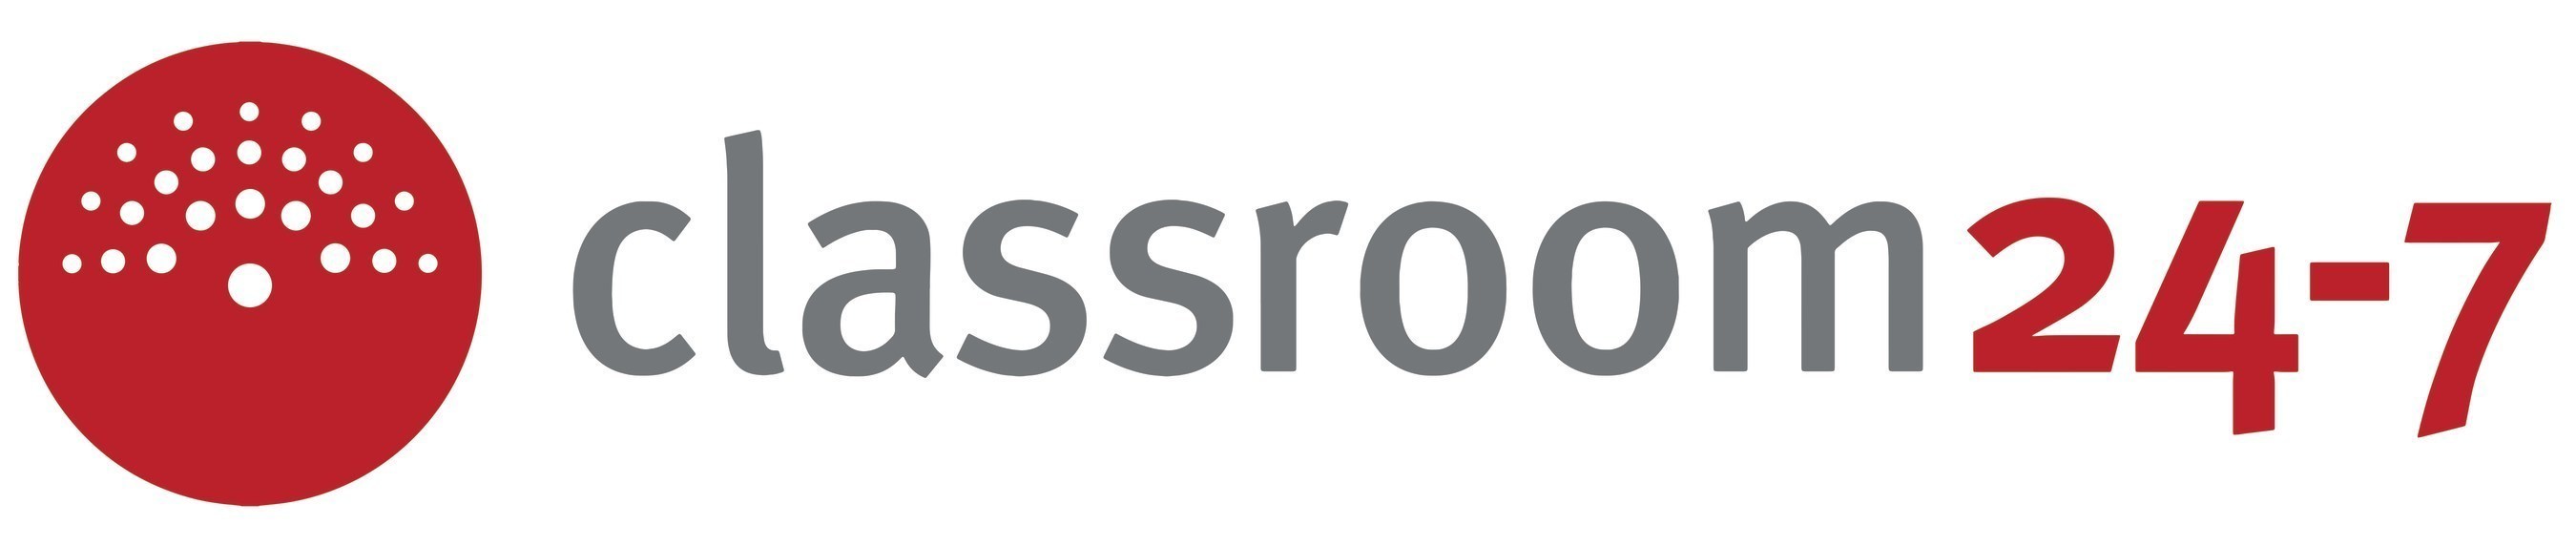 Classroom24-7, LLC. Logo